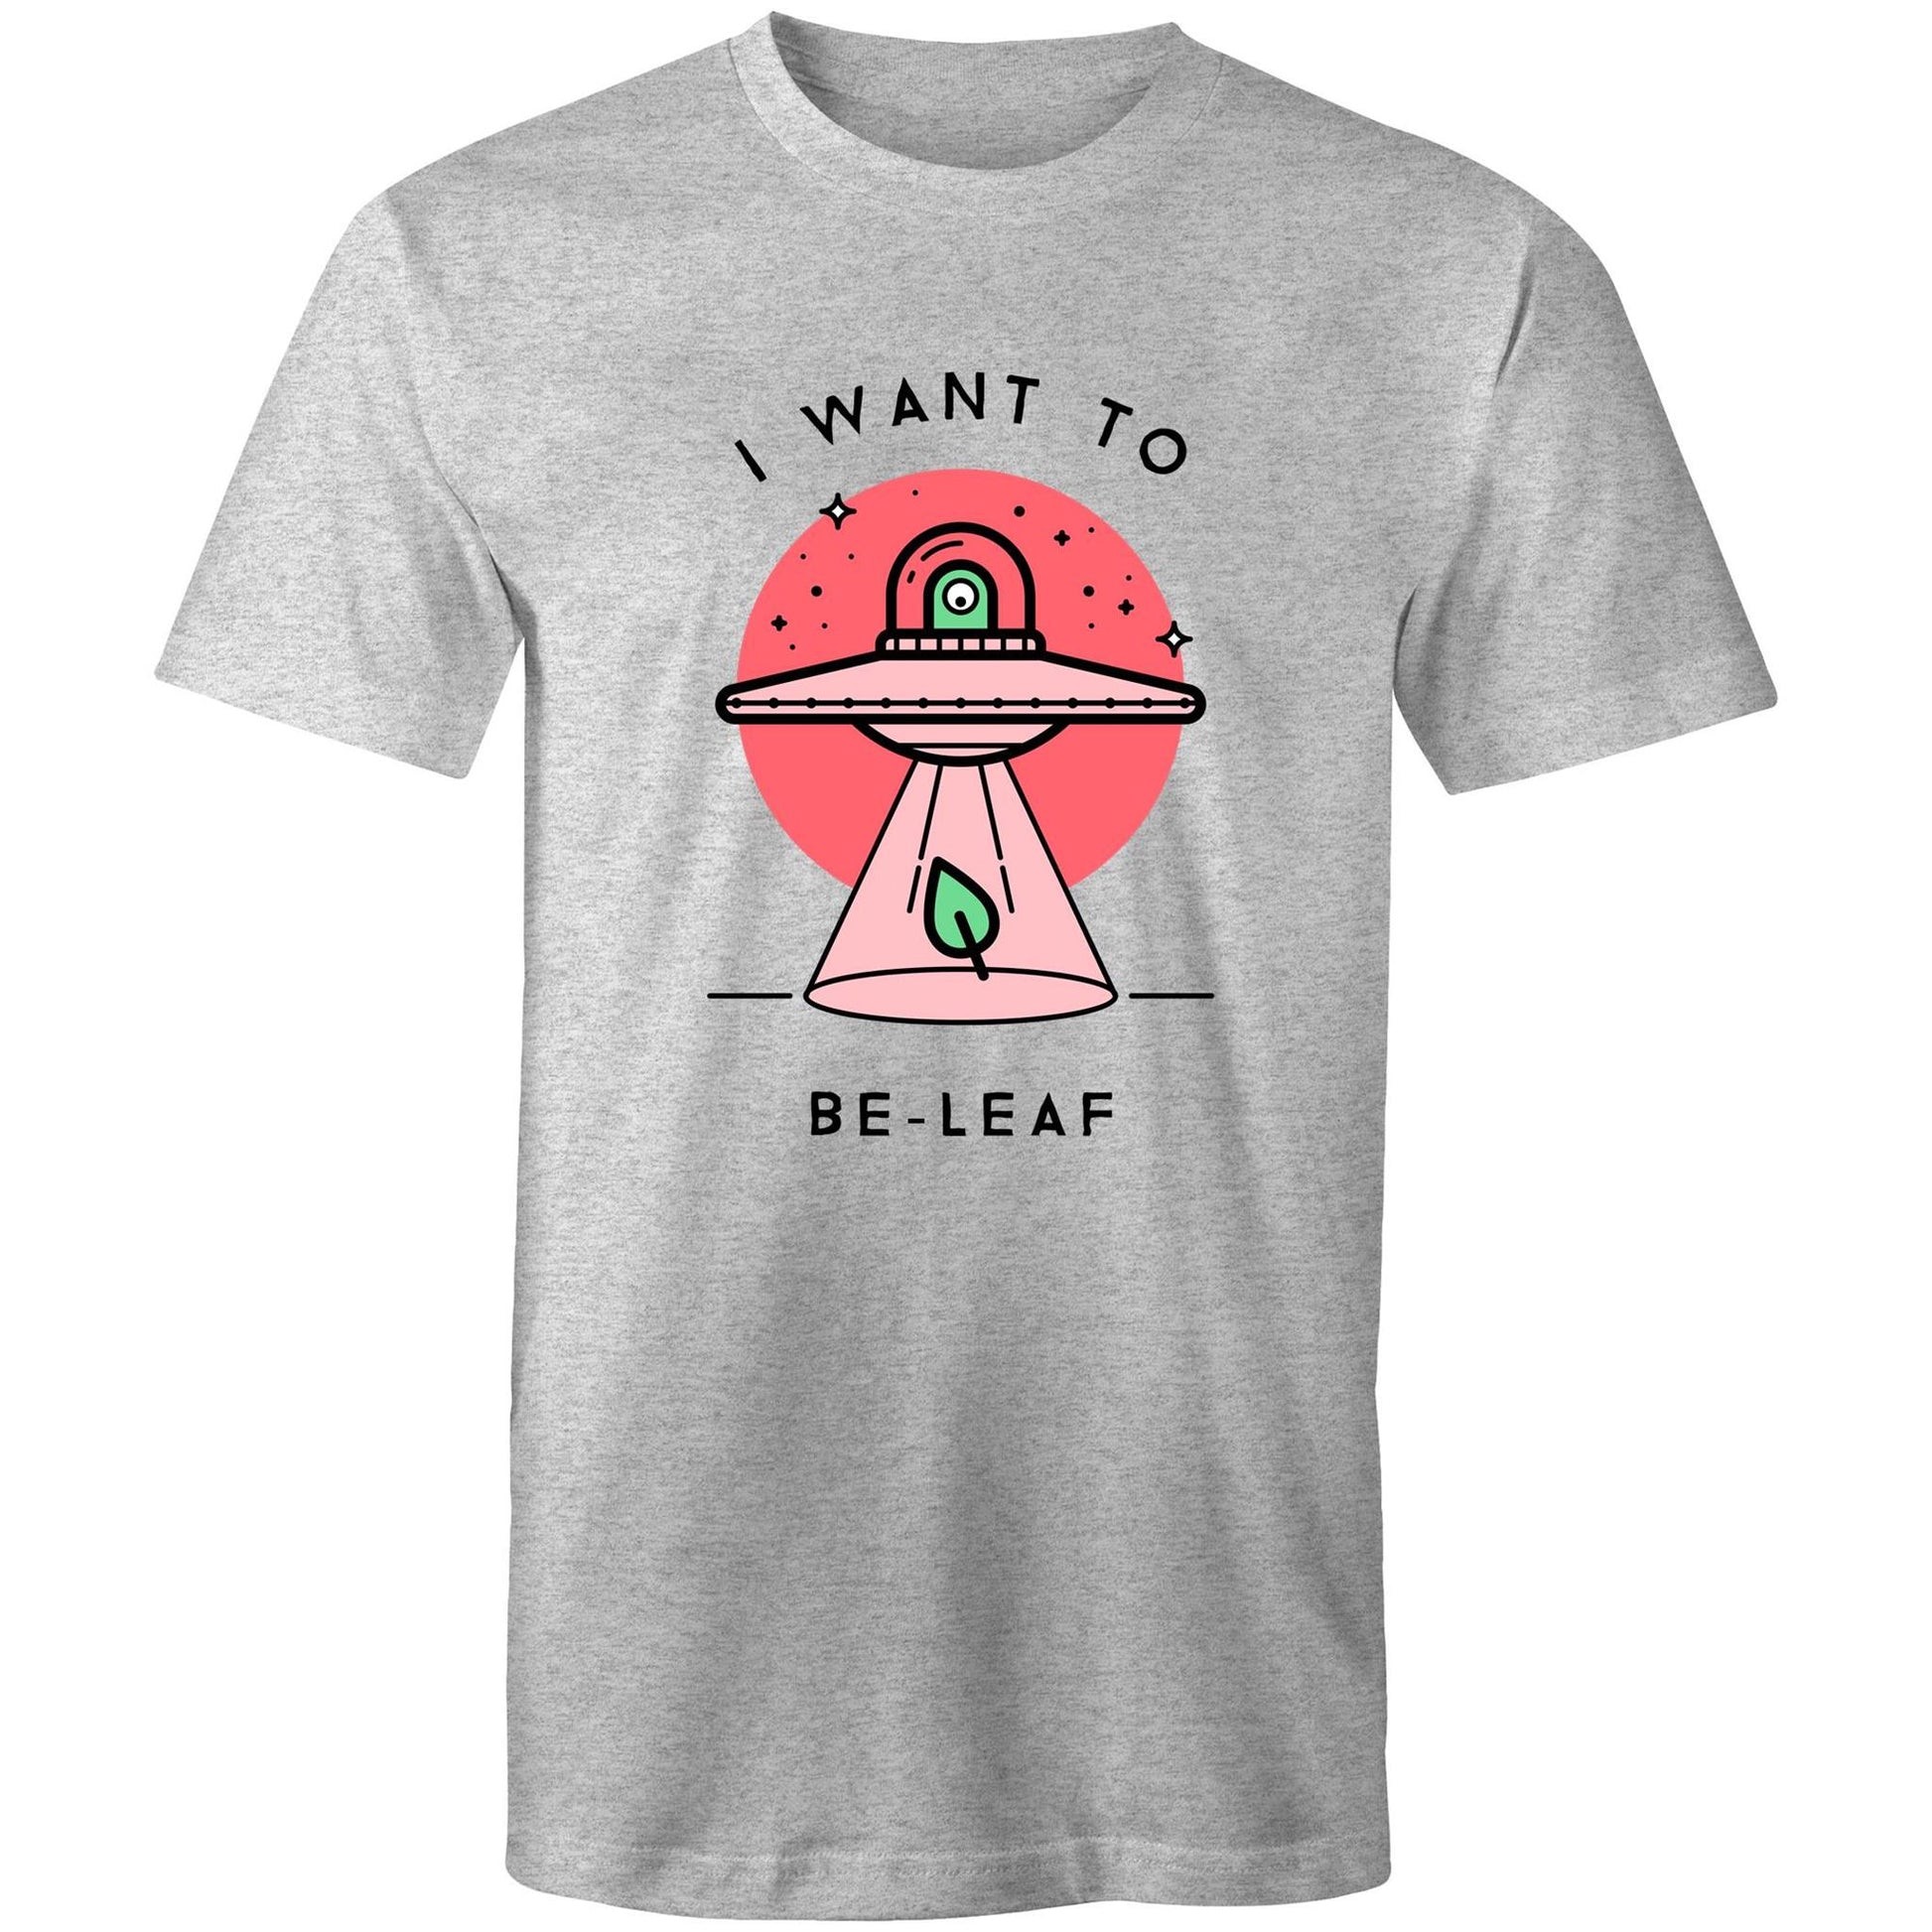 I Want To Be-Leaf, UFO - Mens T-Shirt Grey Marle Mens T-shirt Sci Fi